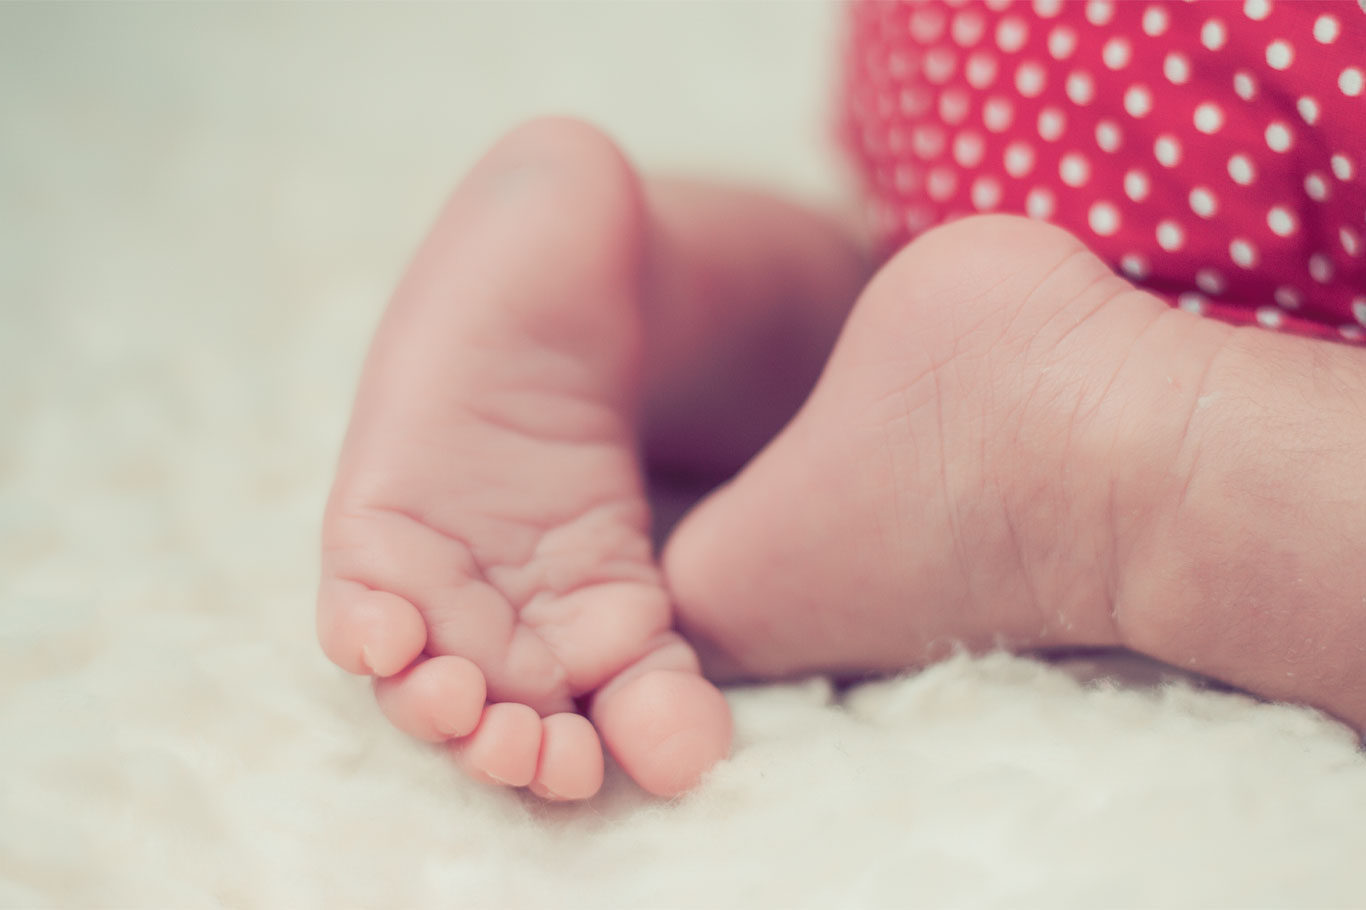 krupni plan levog stopala novorođene bebe